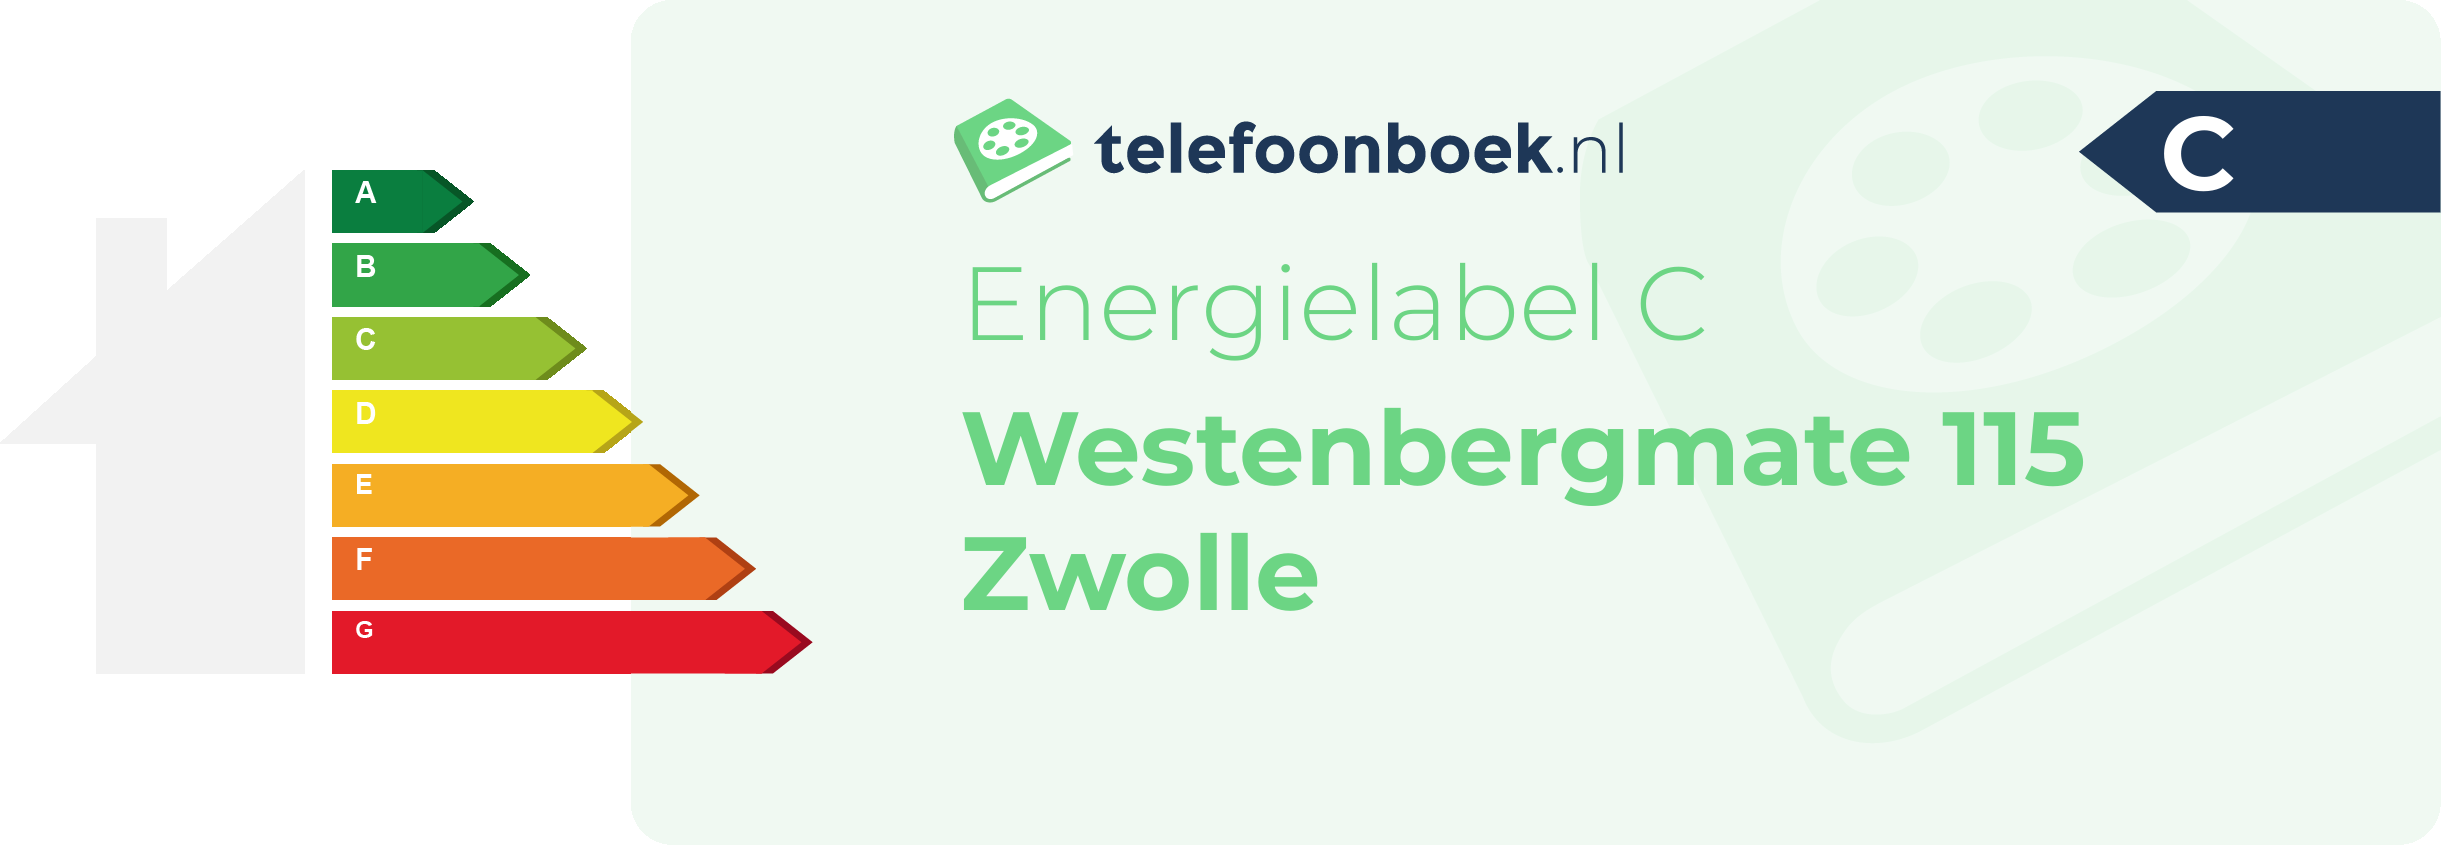 Energielabel Westenbergmate 115 Zwolle